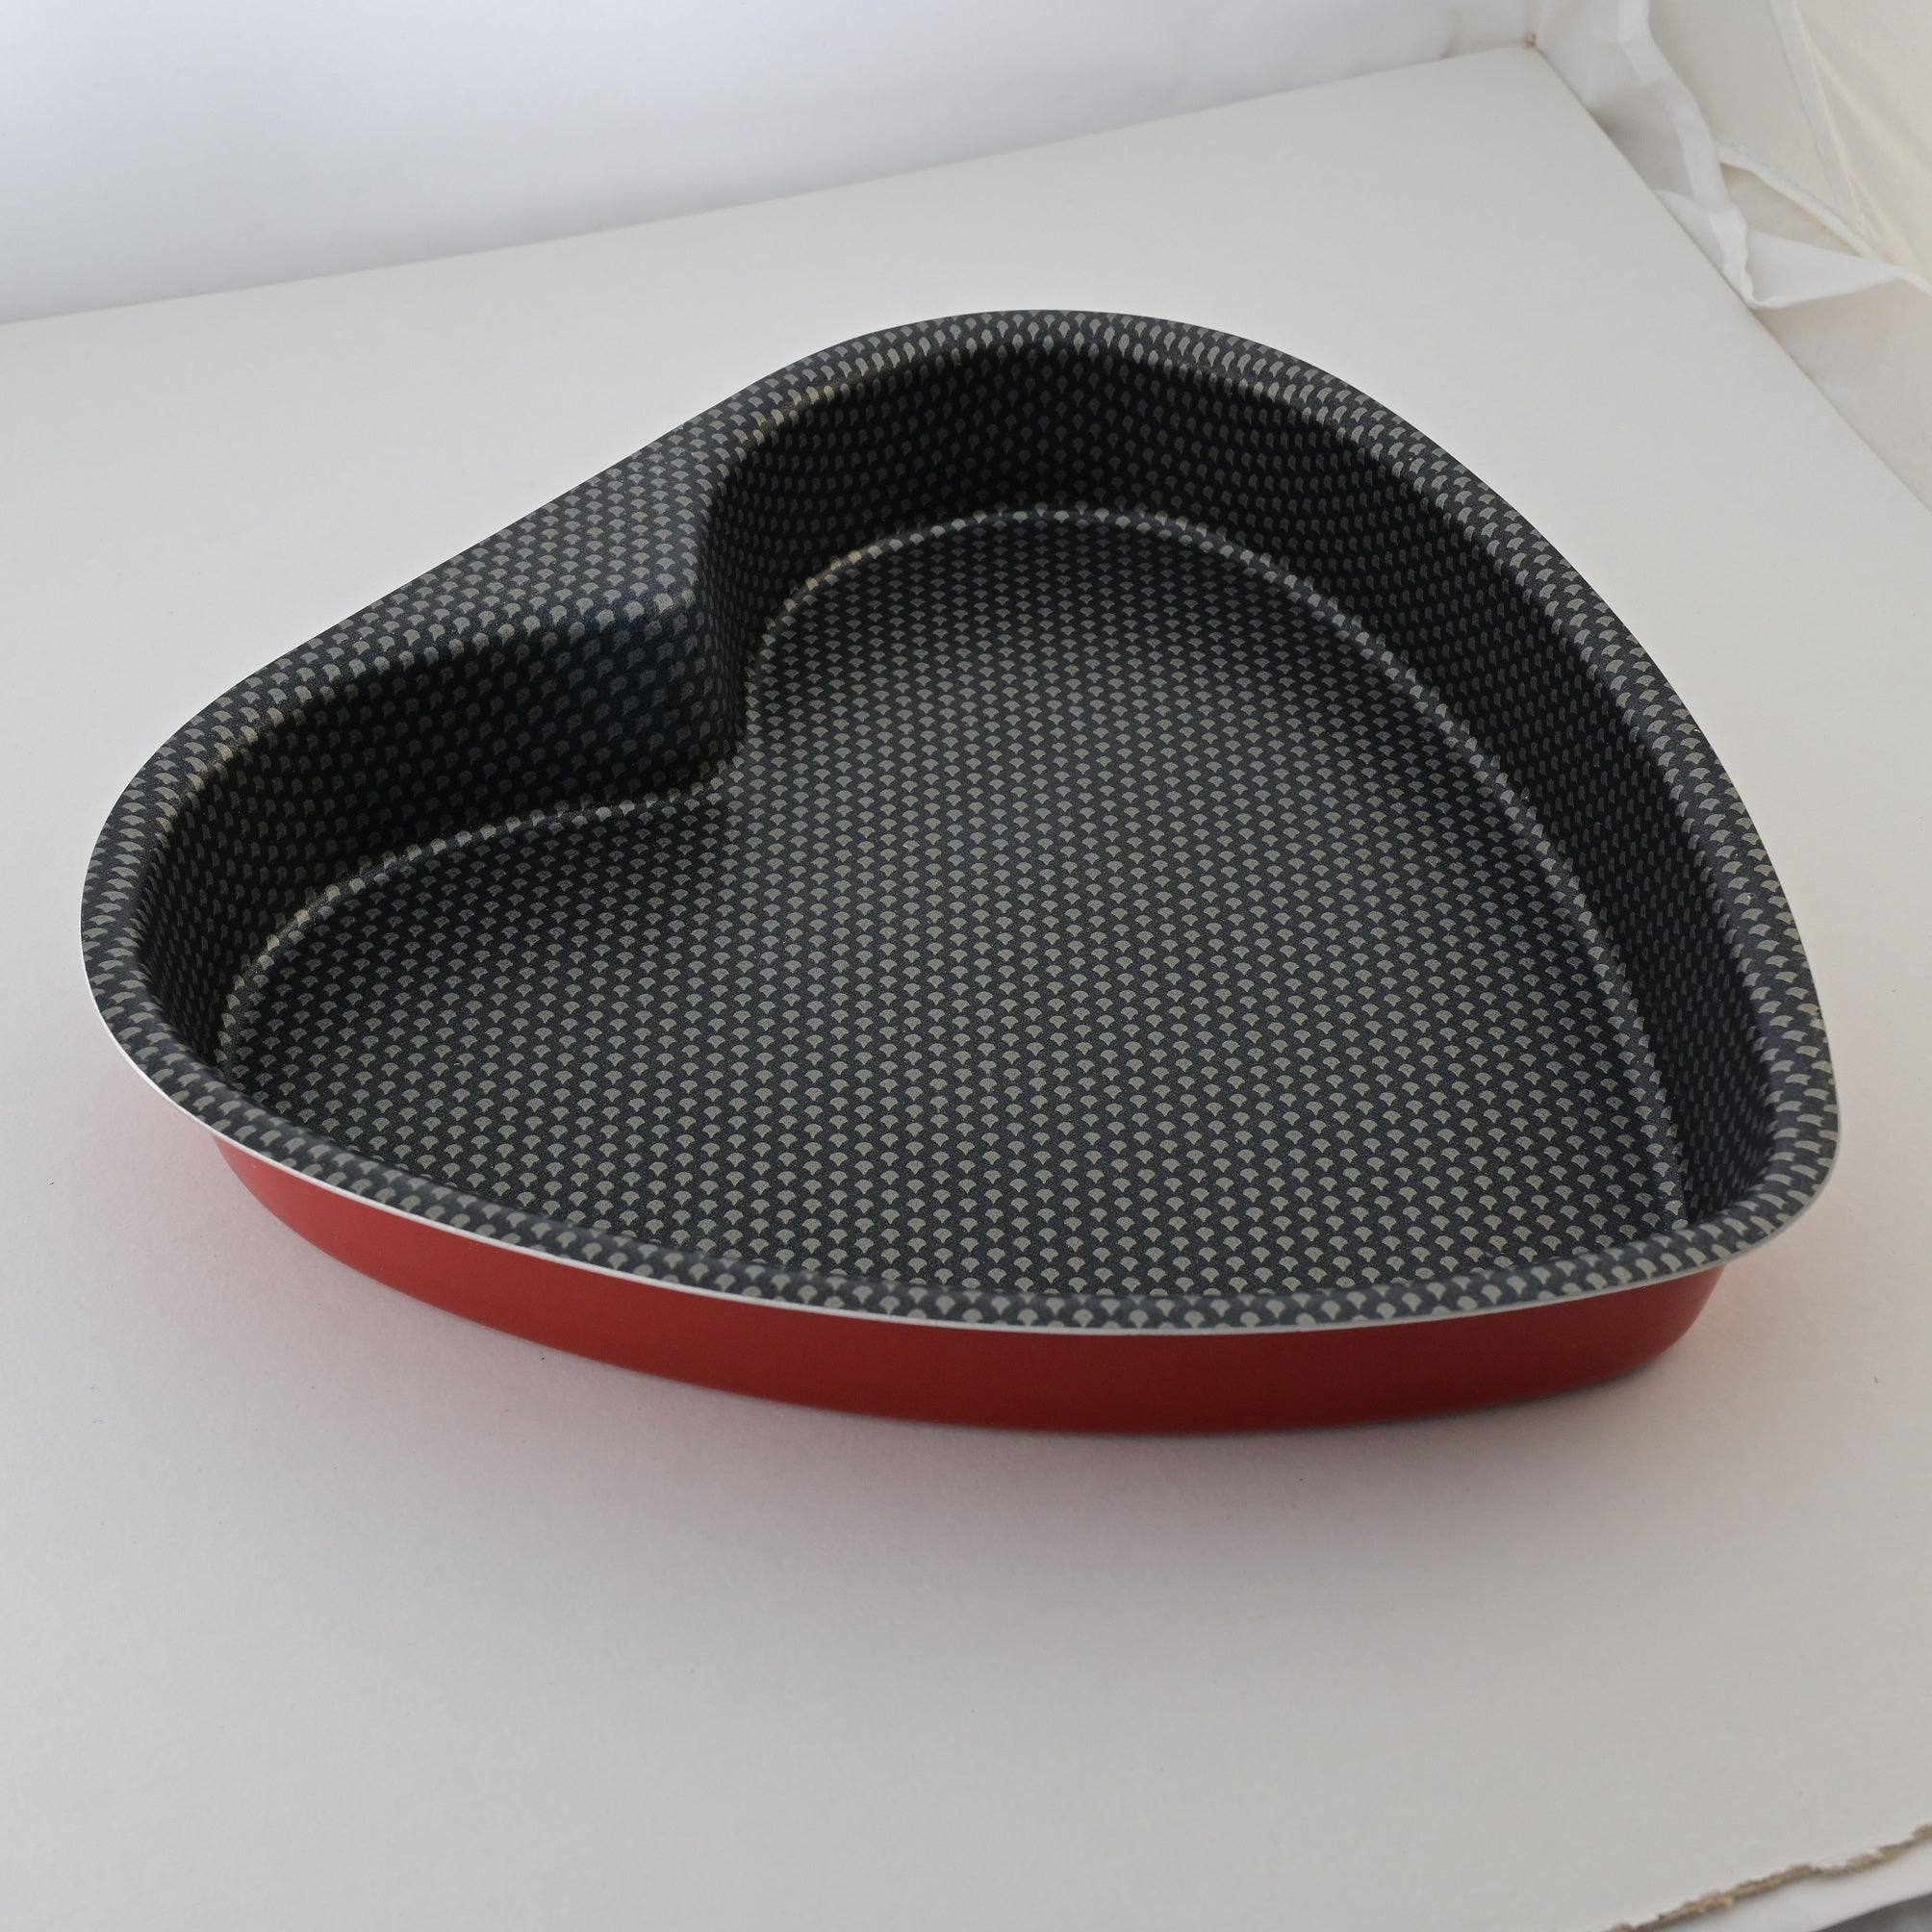 Tefal 28cm Heart Shaped Non-stick Cake Pan